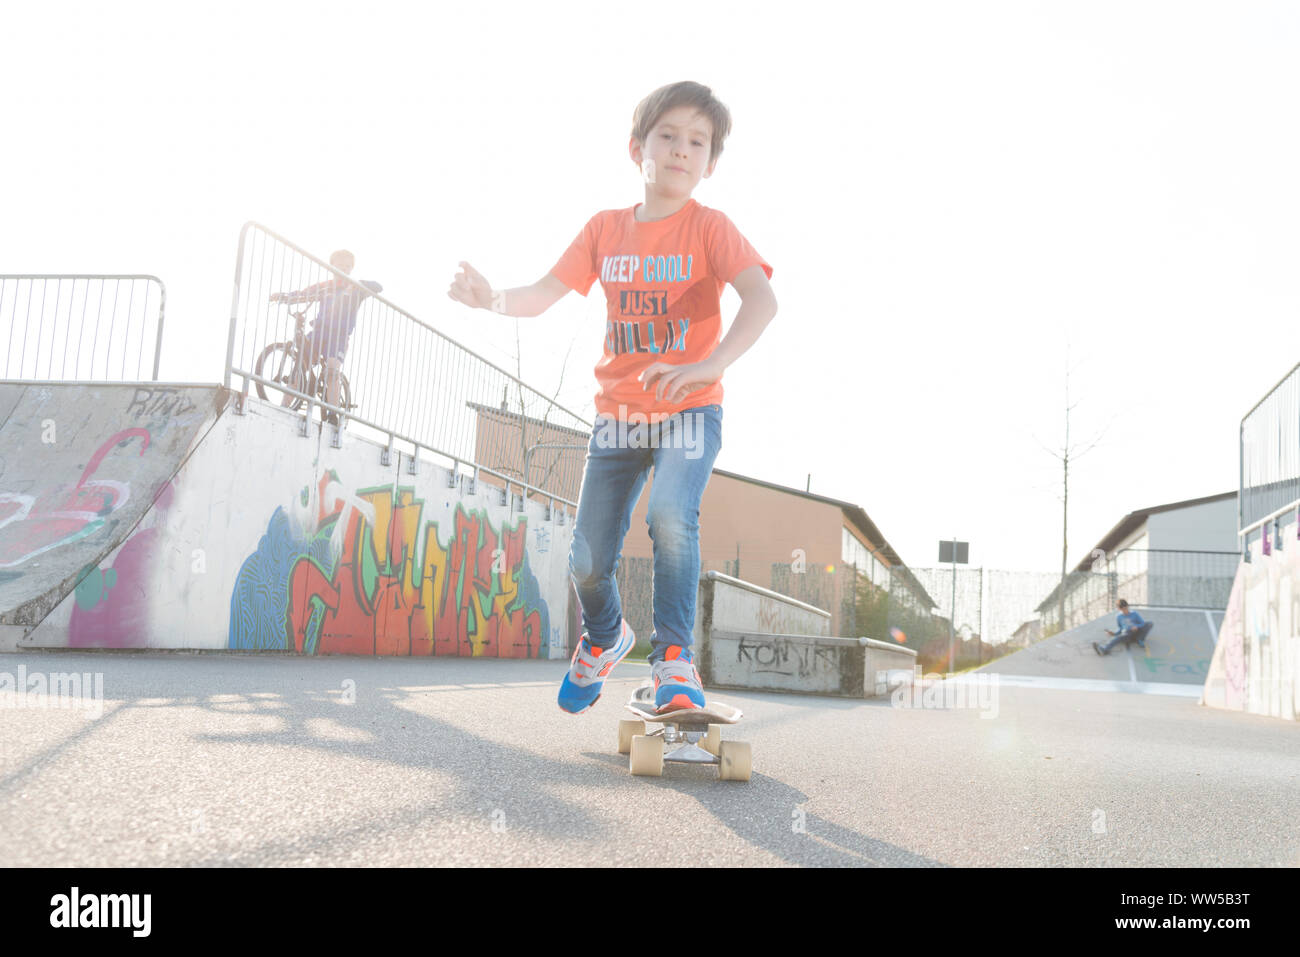 Boy in the orange T-shirt riding skateboard Stock Photo